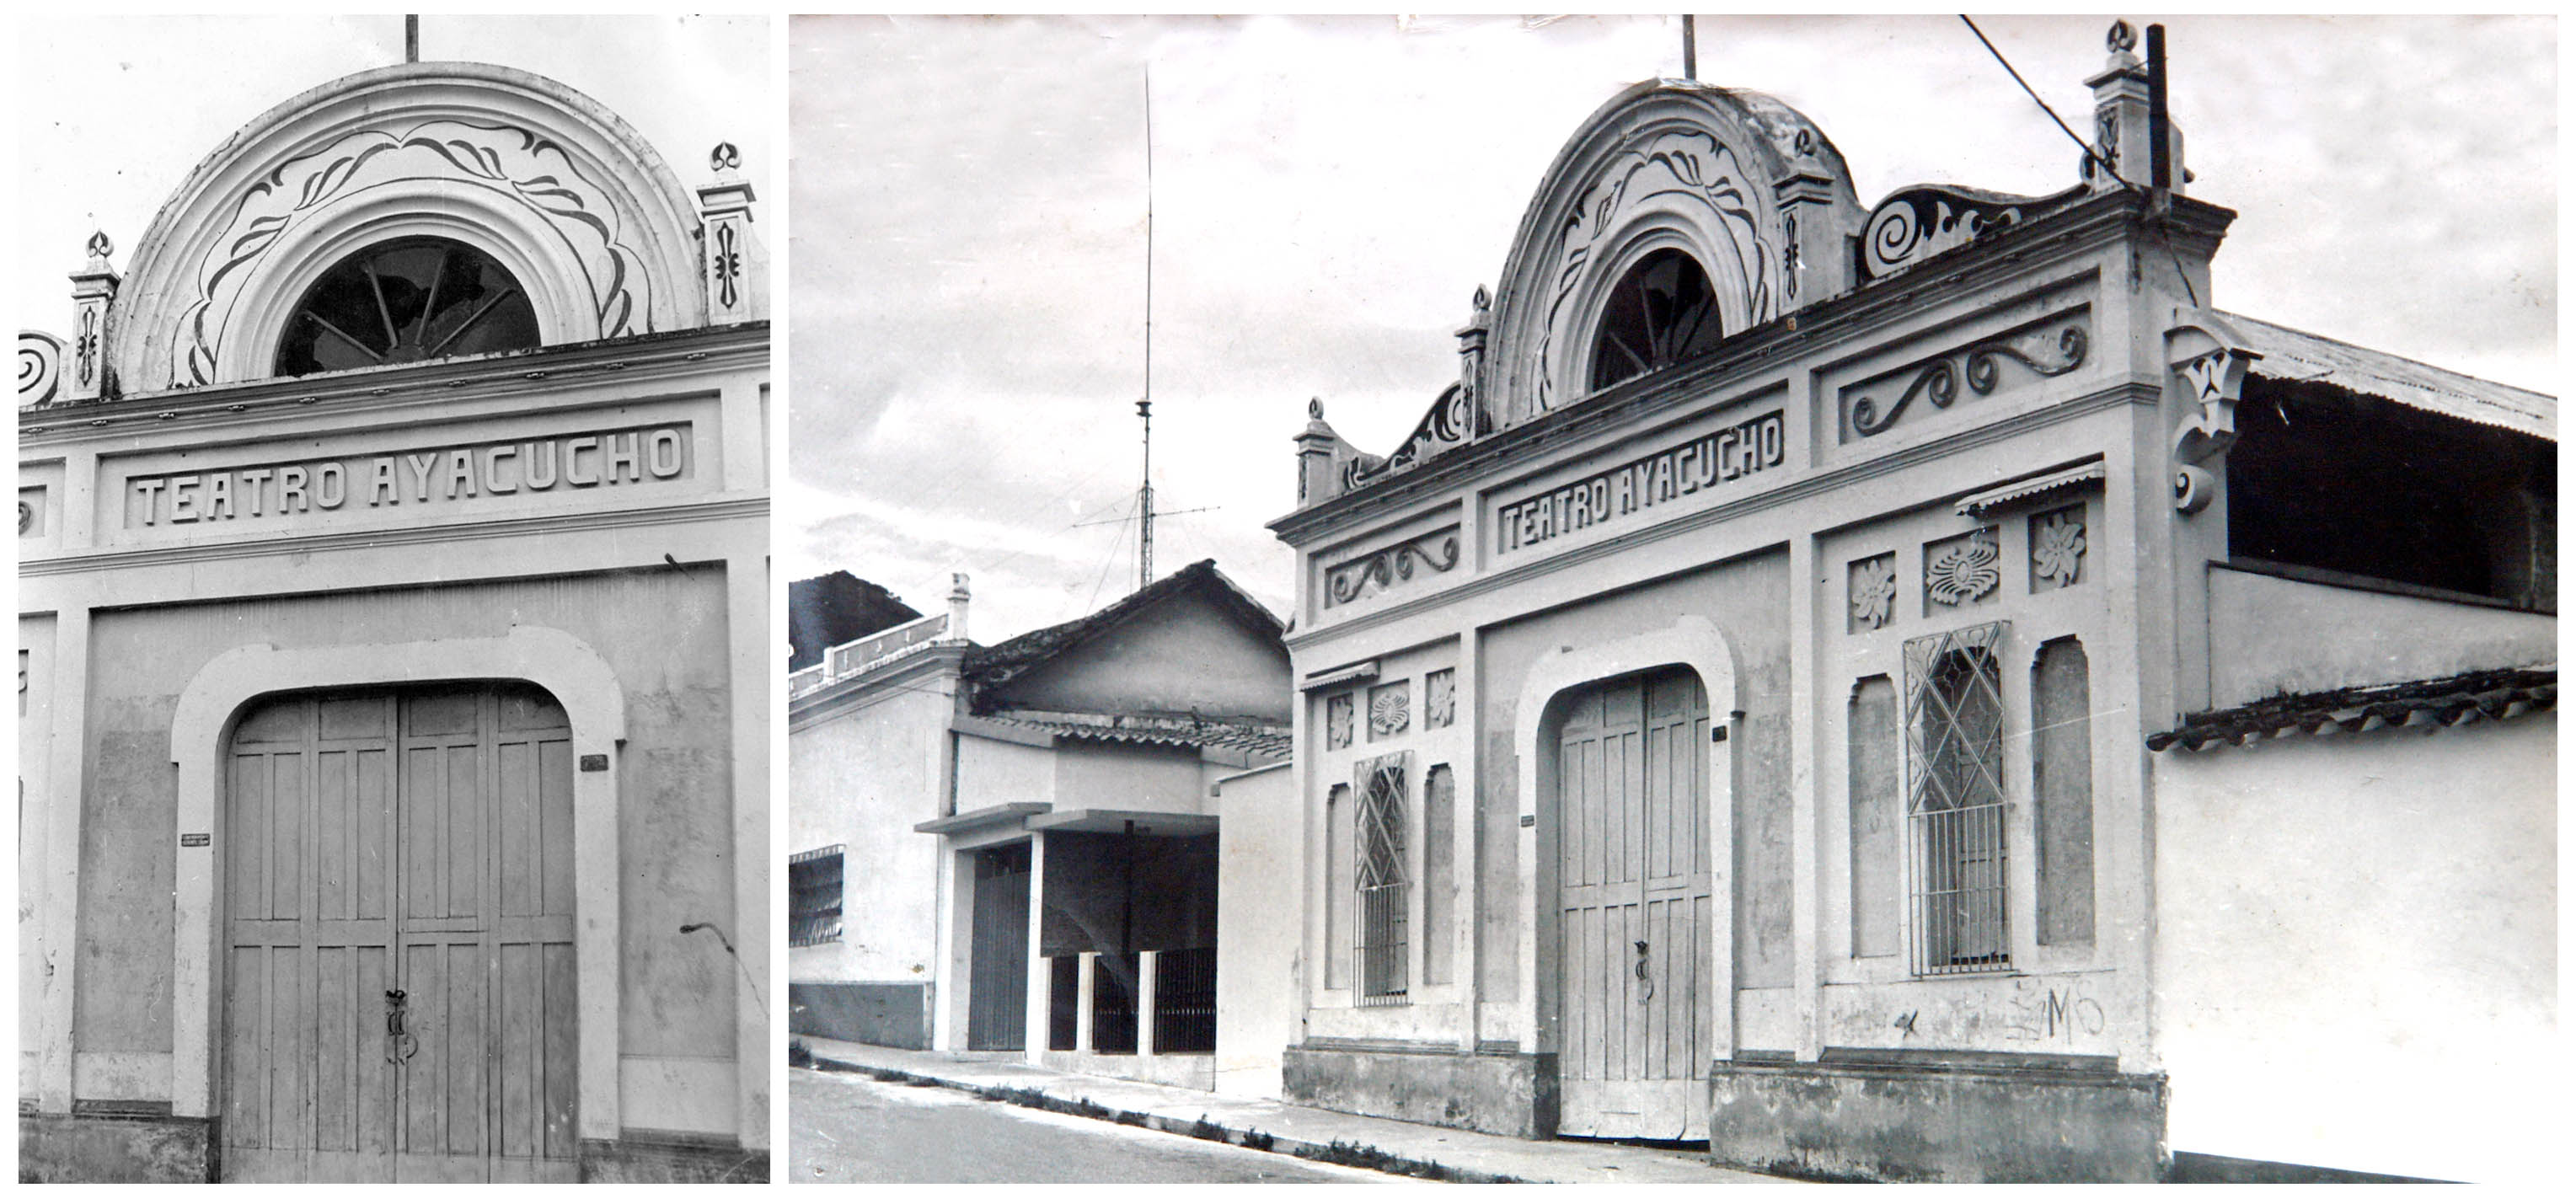 Teatro Ayacucho Archivo de Oscar Abraham Pabon